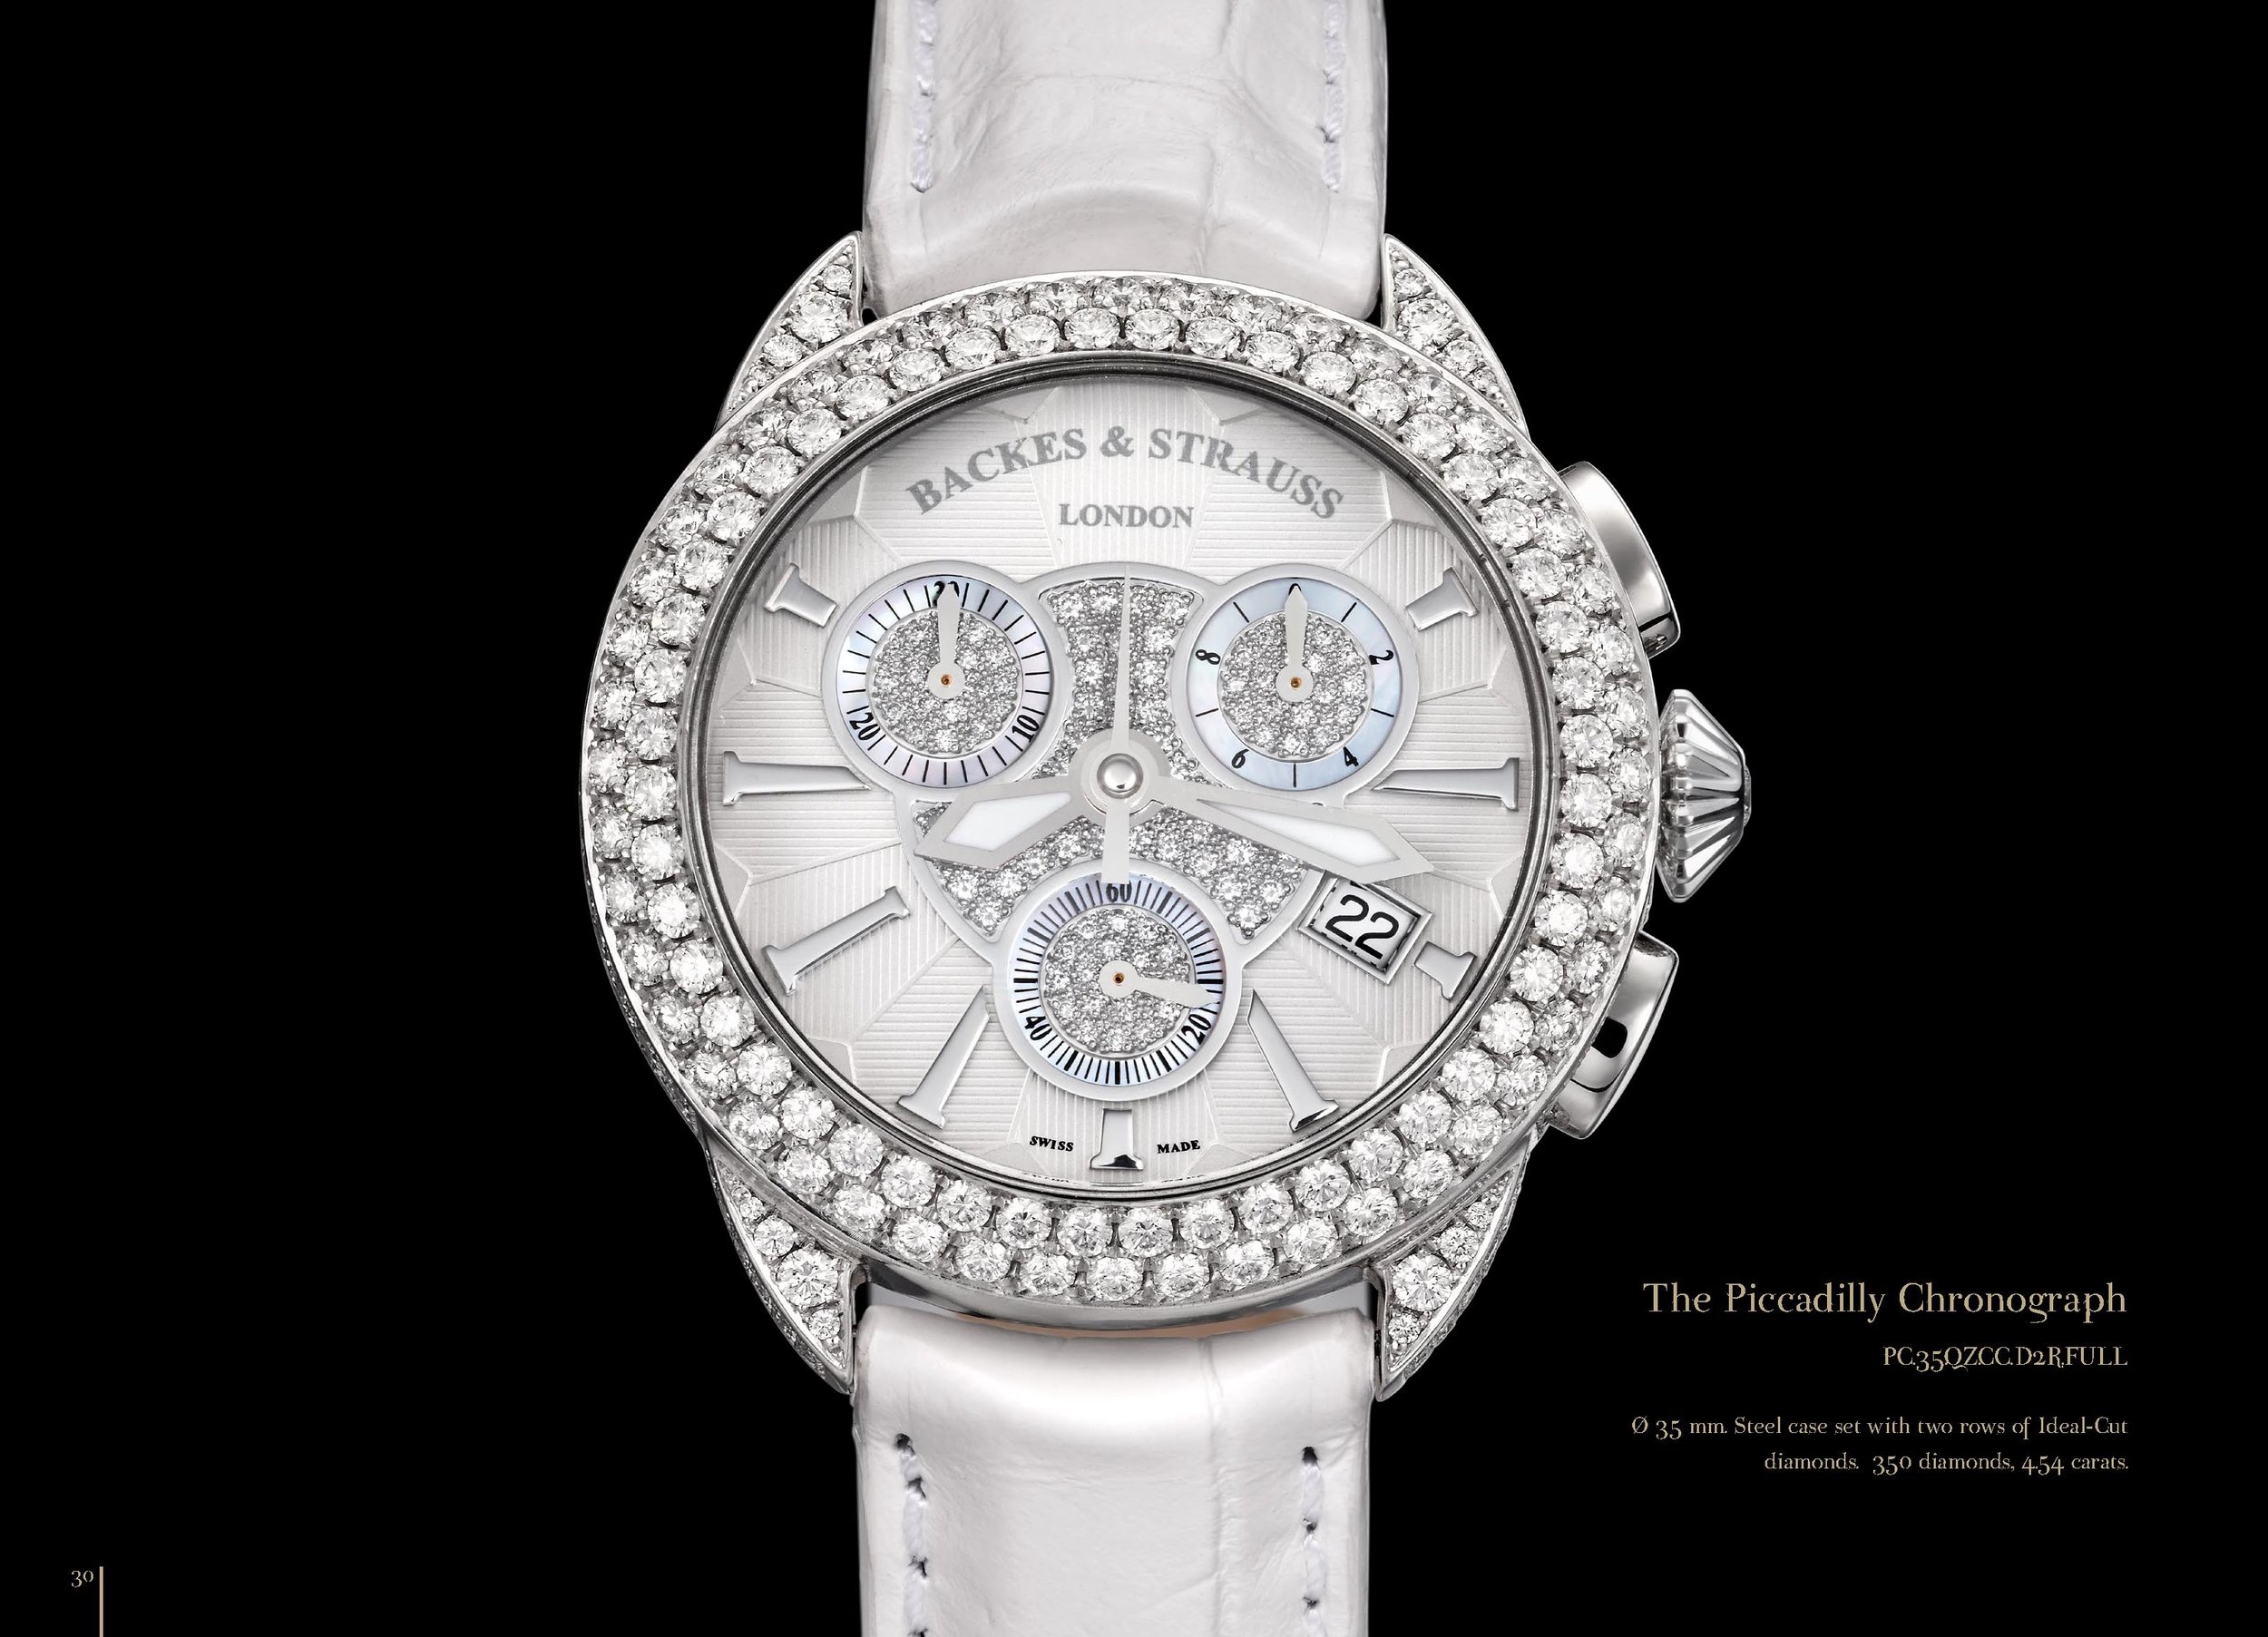 Piccadilly Chronograph 35 diamond watch